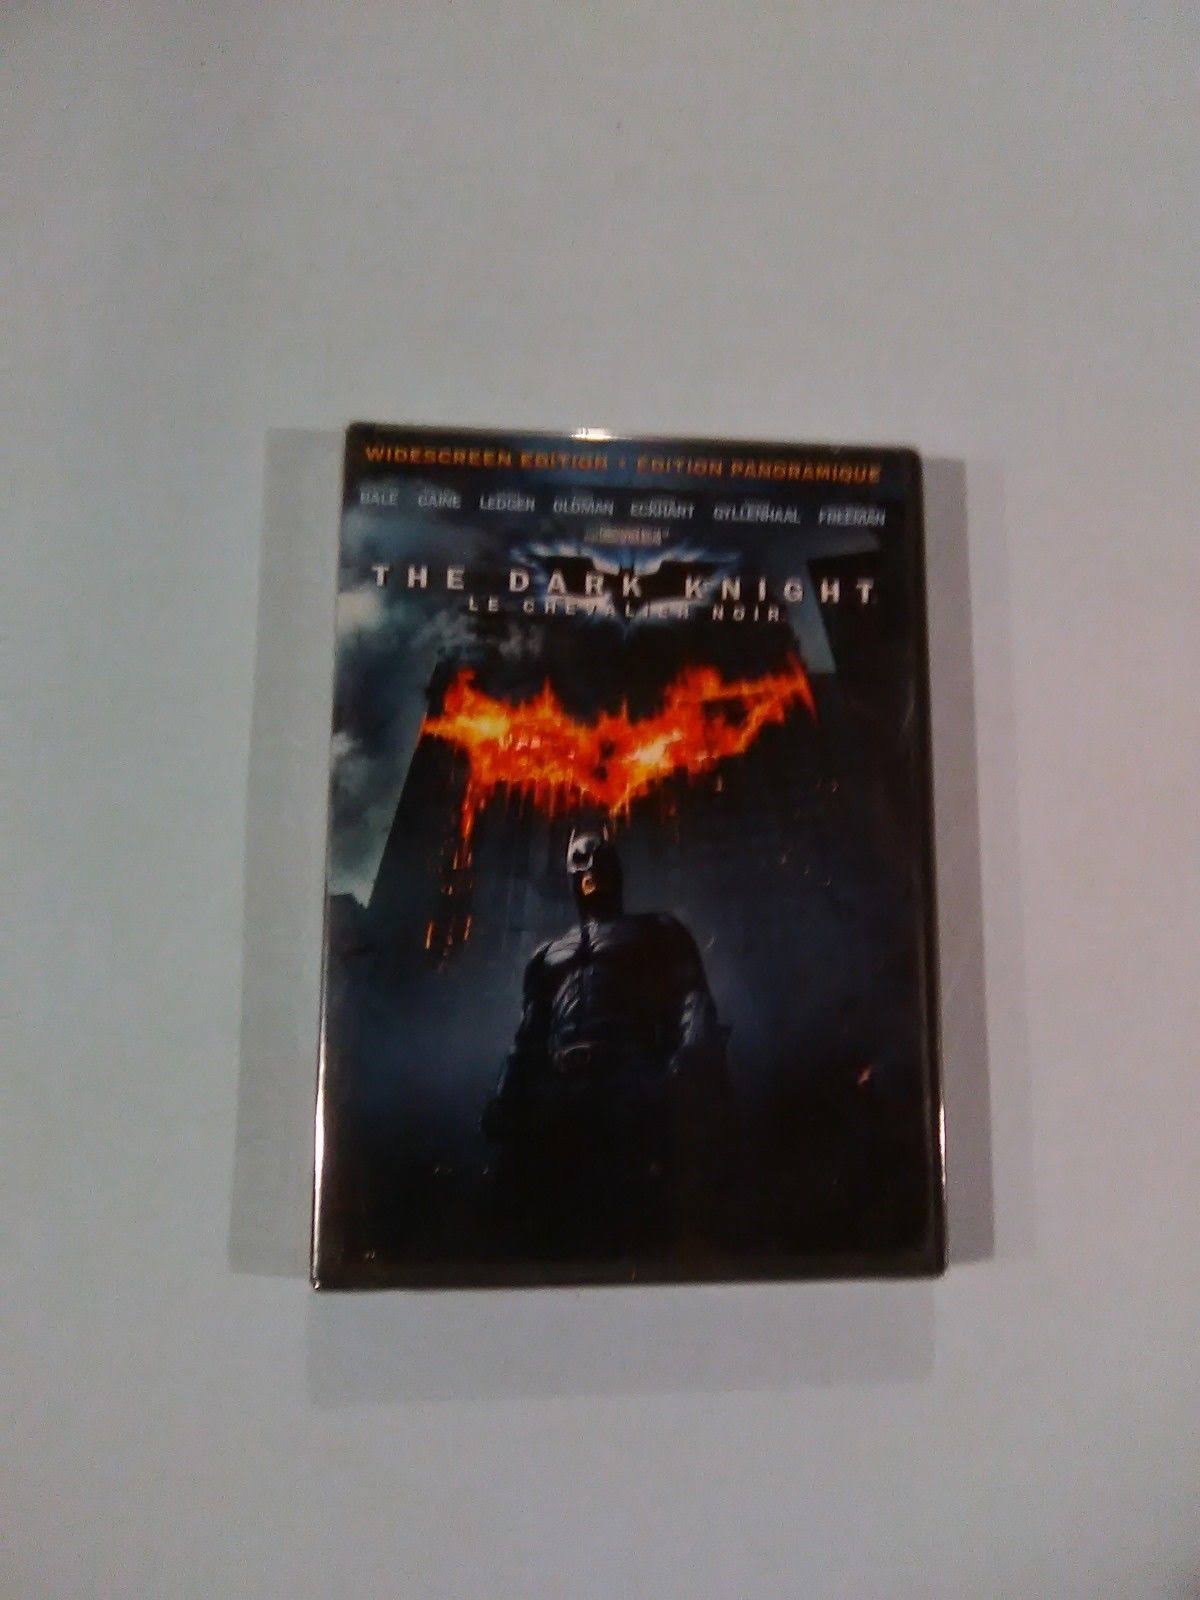 The Dark Knight DVD